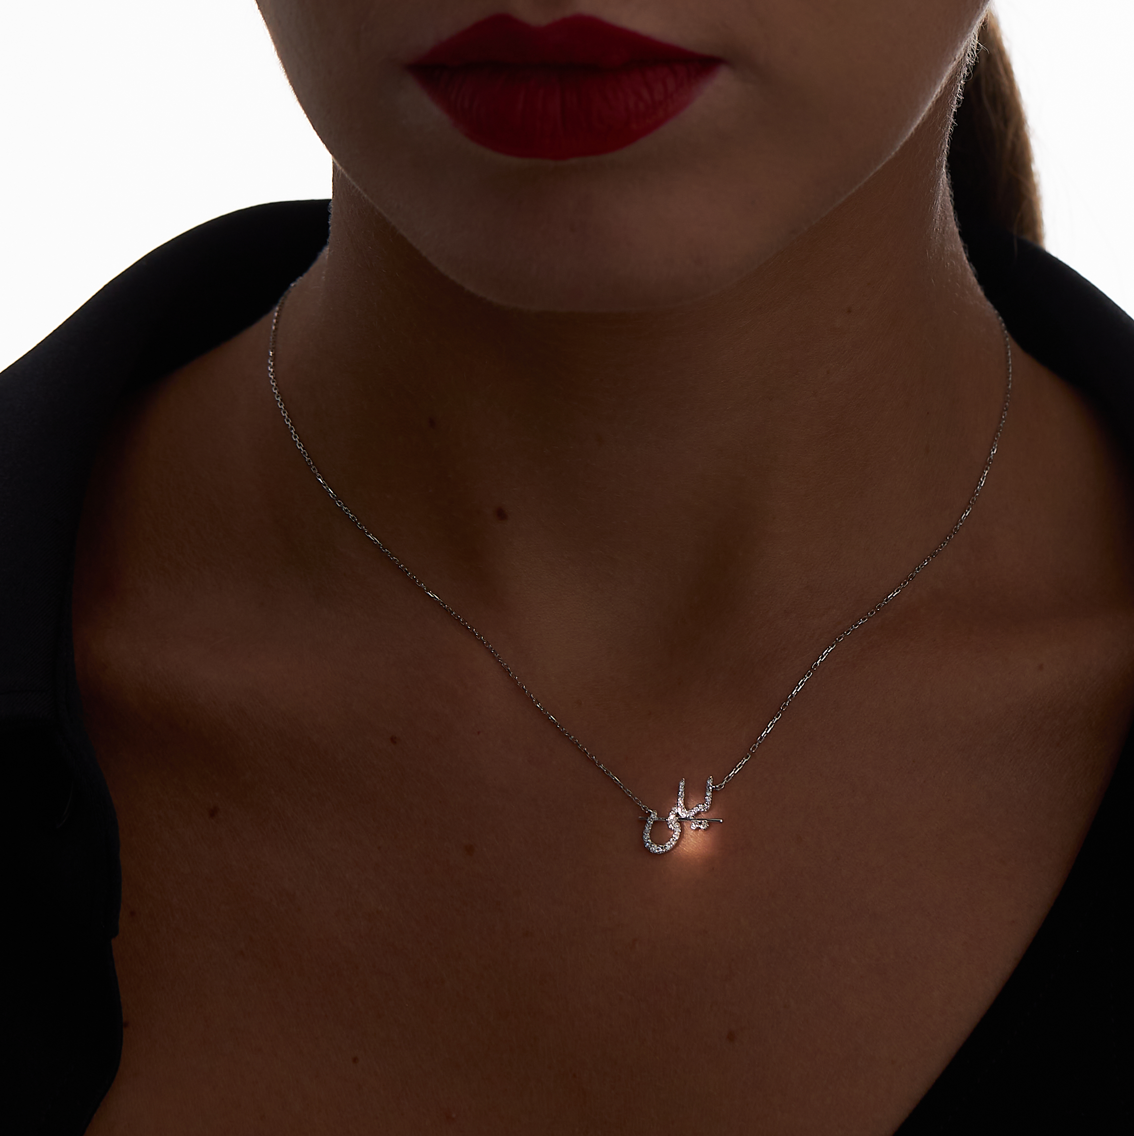 Customize your Pavé Diamond Name Necklace